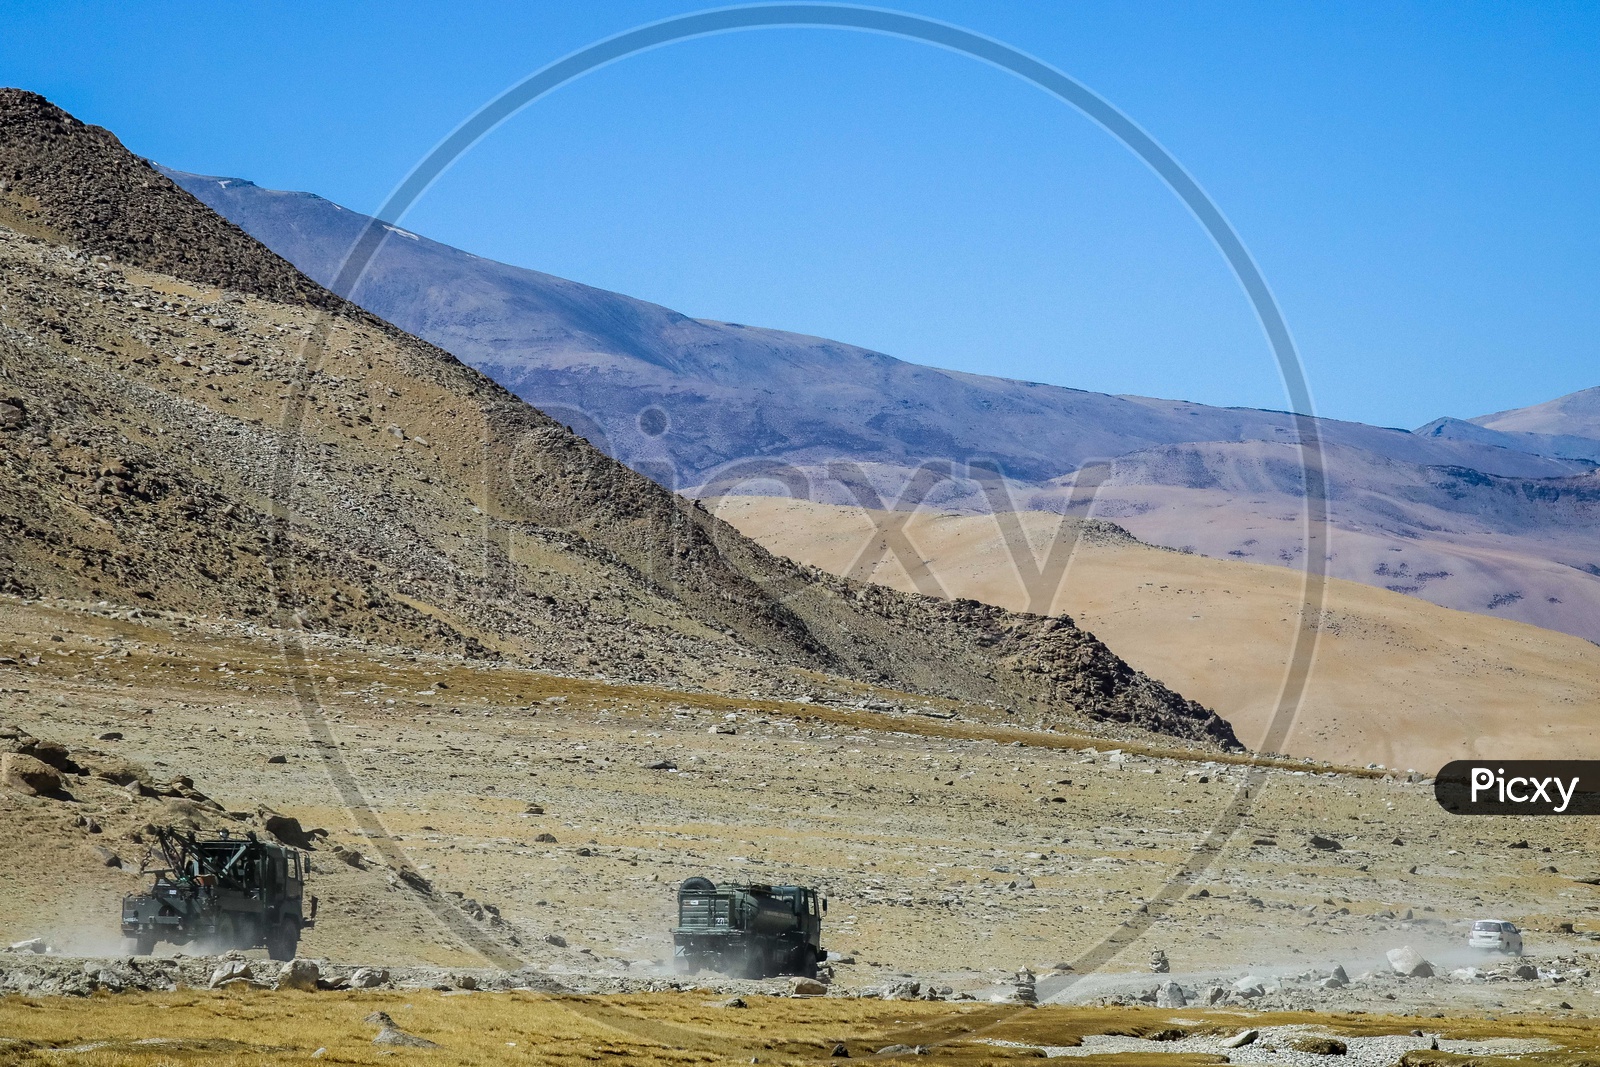 Indian Army Vehicles in Leh Ladakh region